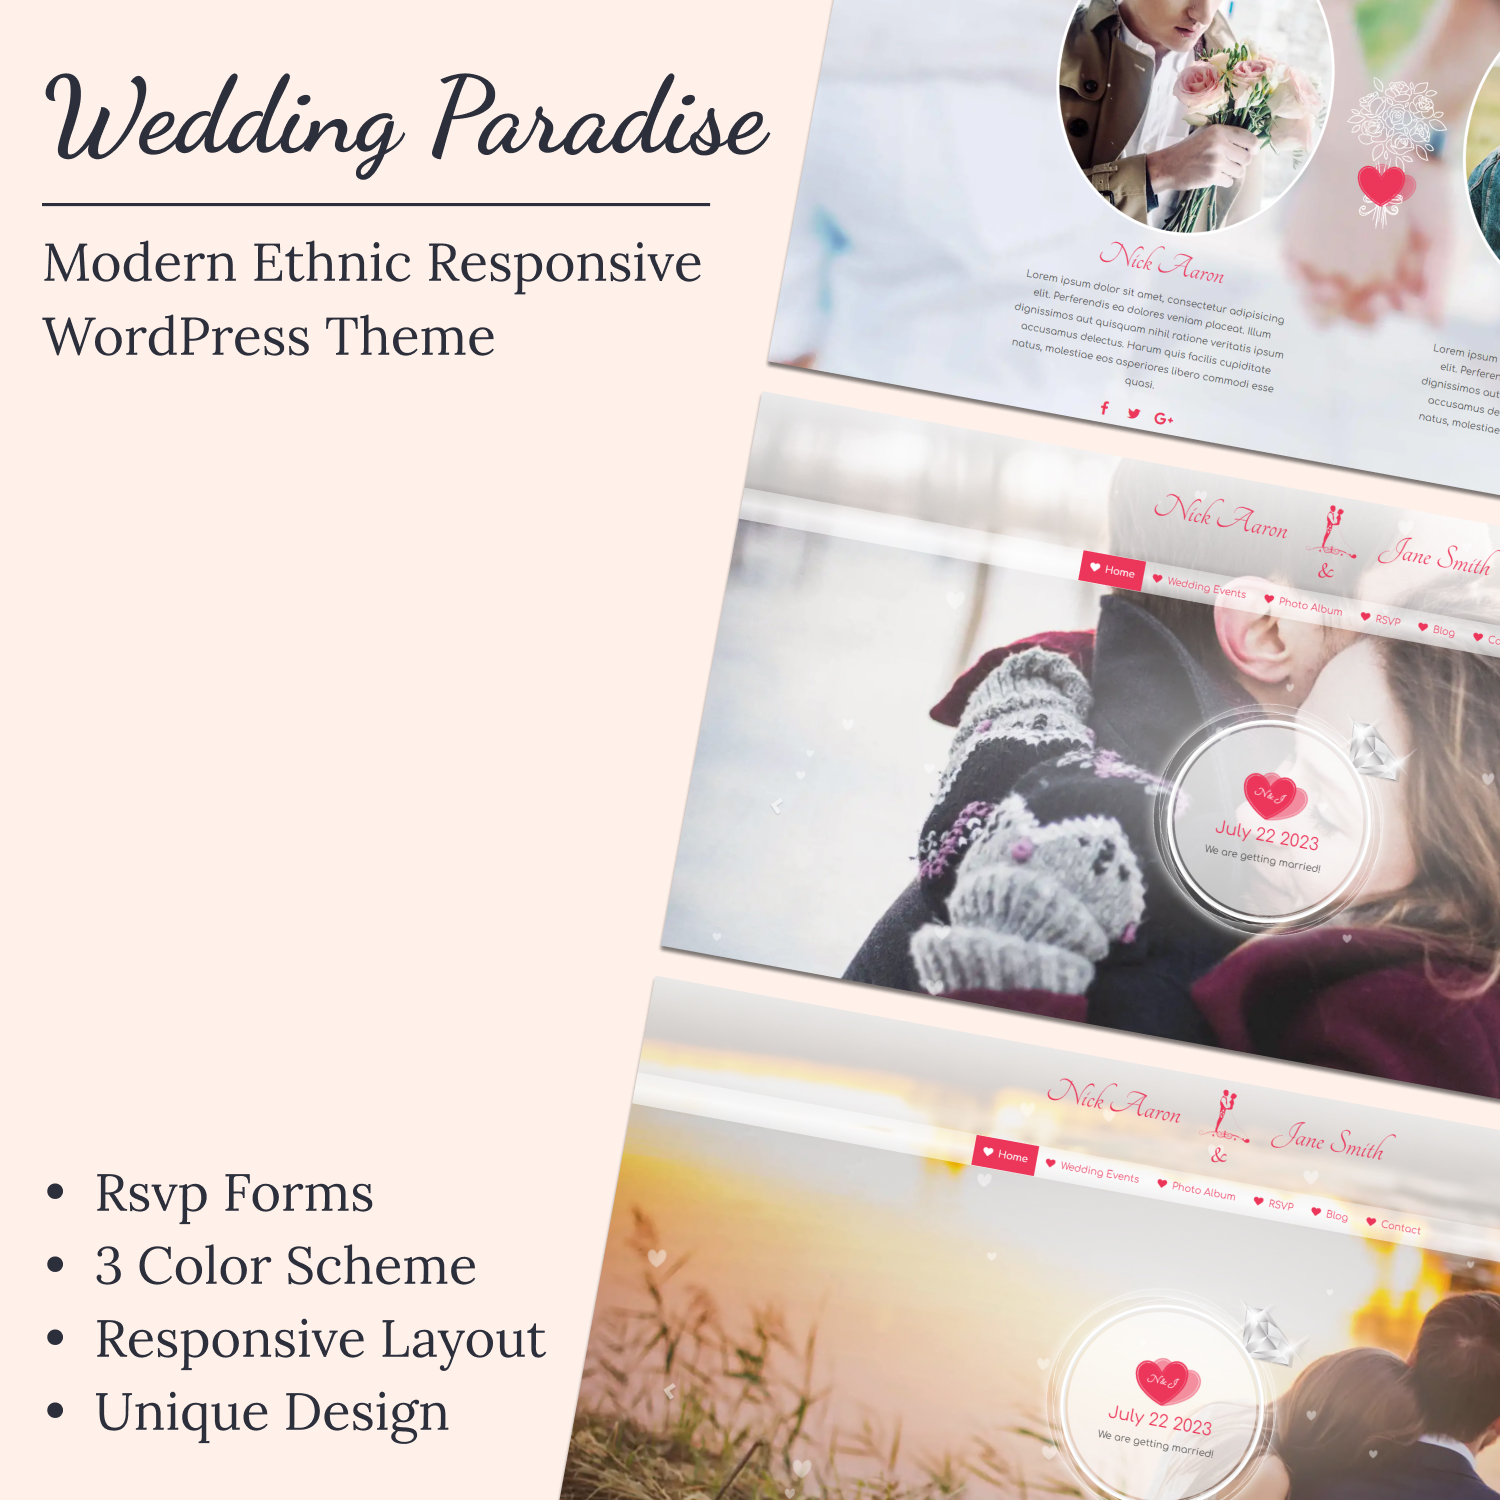 Preview wedding paradise – modern ethnic responsive wordpress theme.